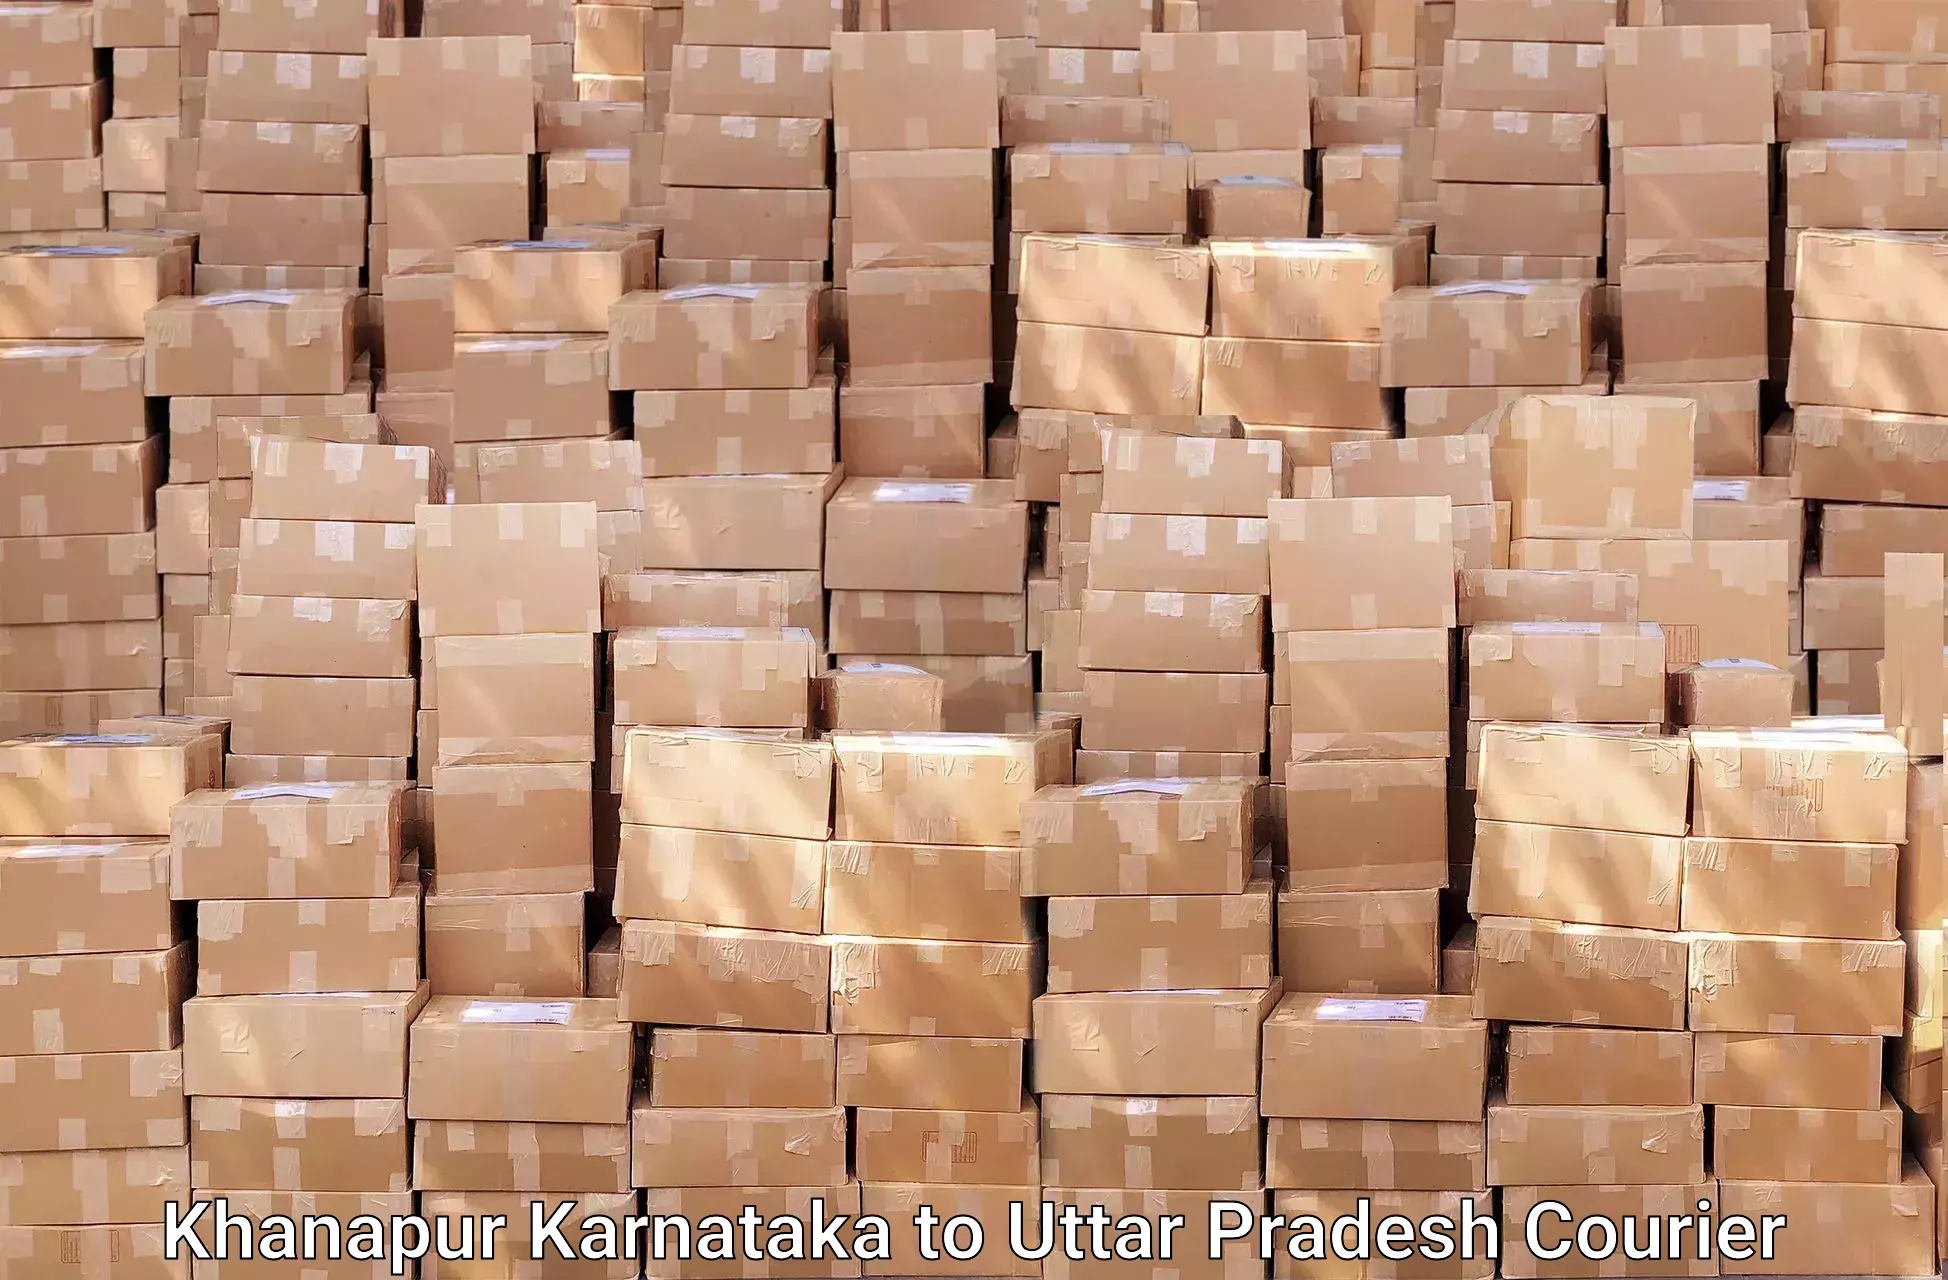 Professional moving company Khanapur Karnataka to Bahraich